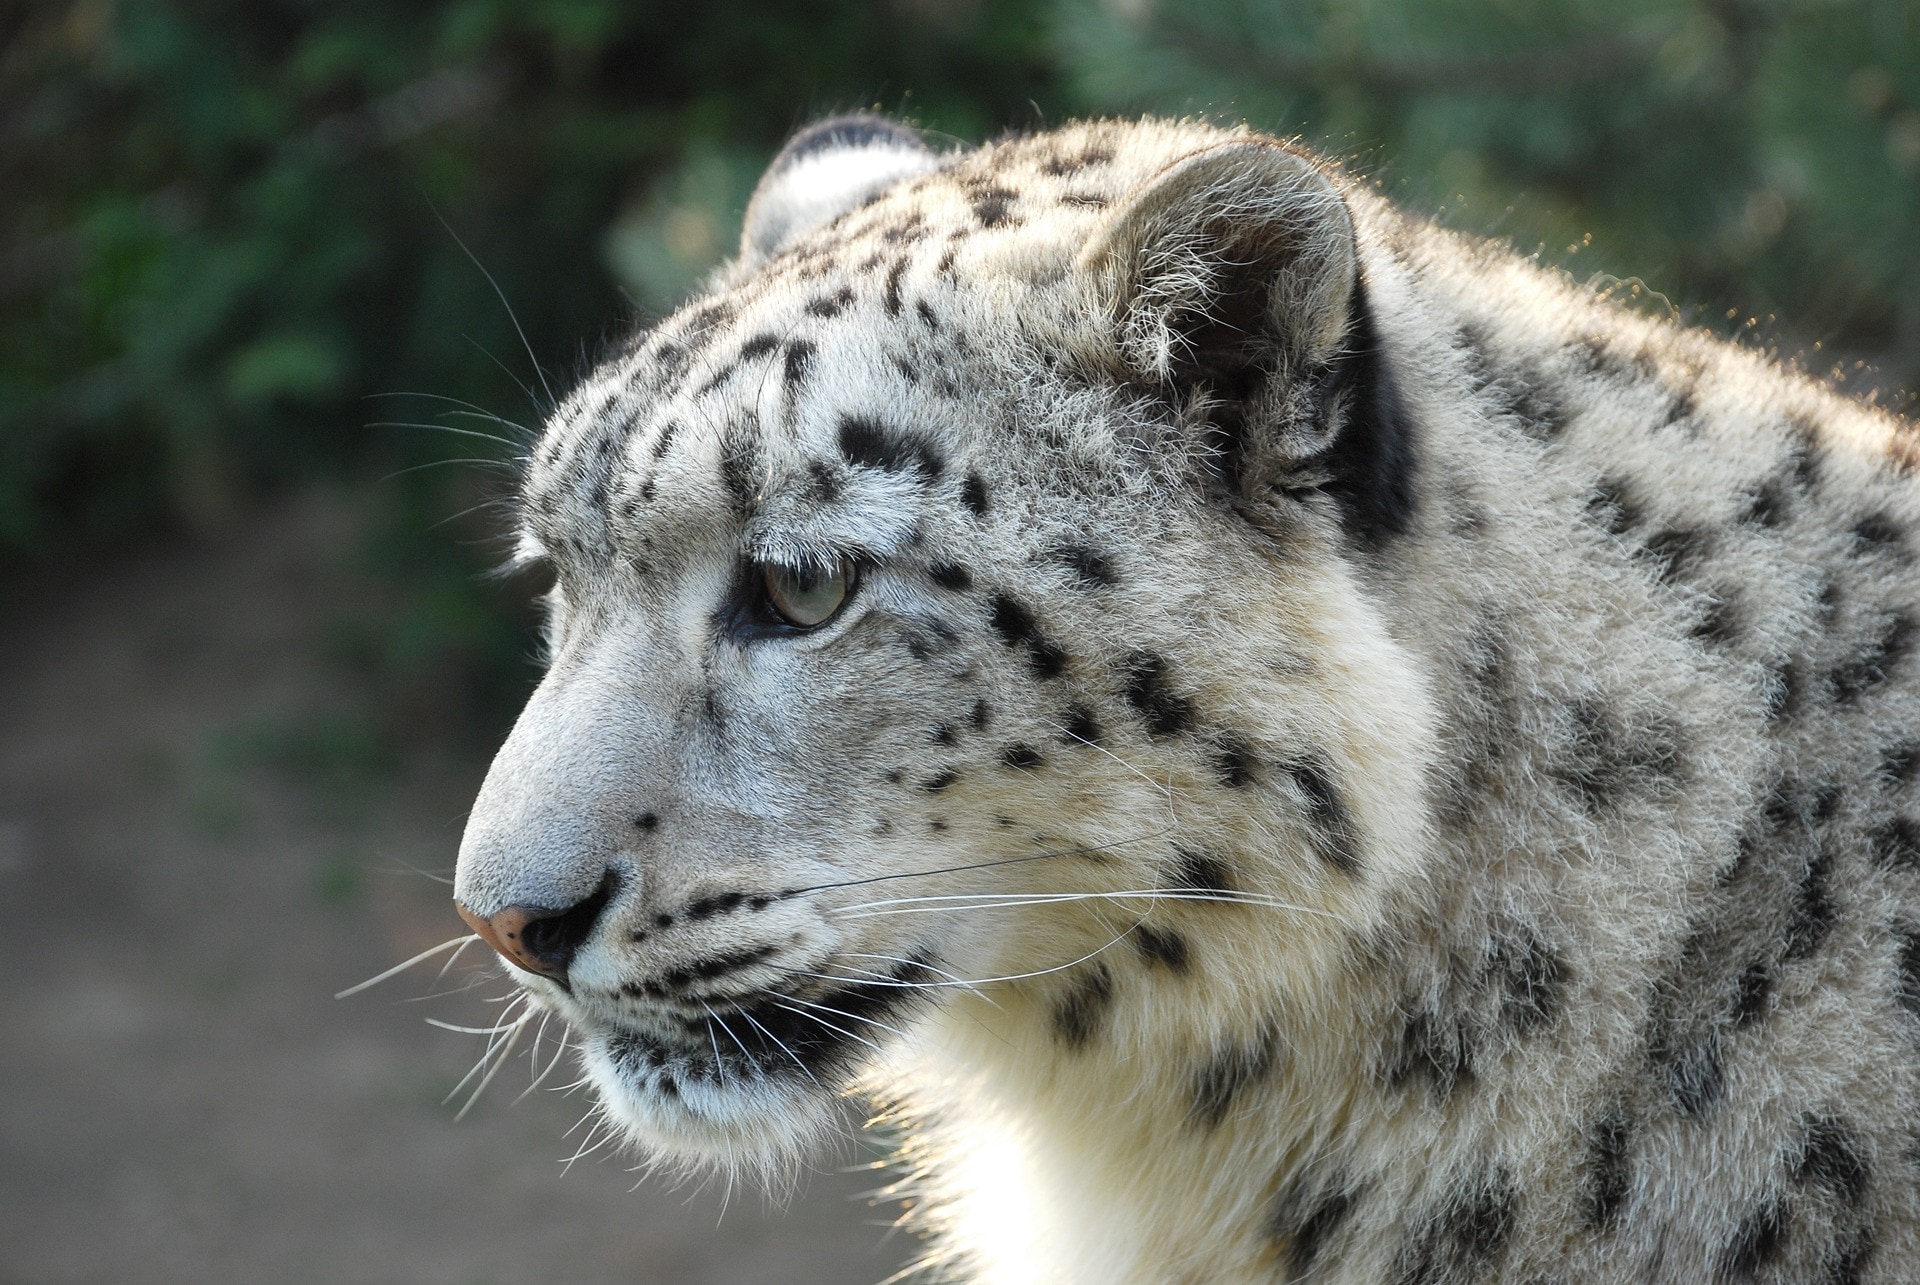 Snow Leopard, Leopard, Tiger, one animal, animal themes